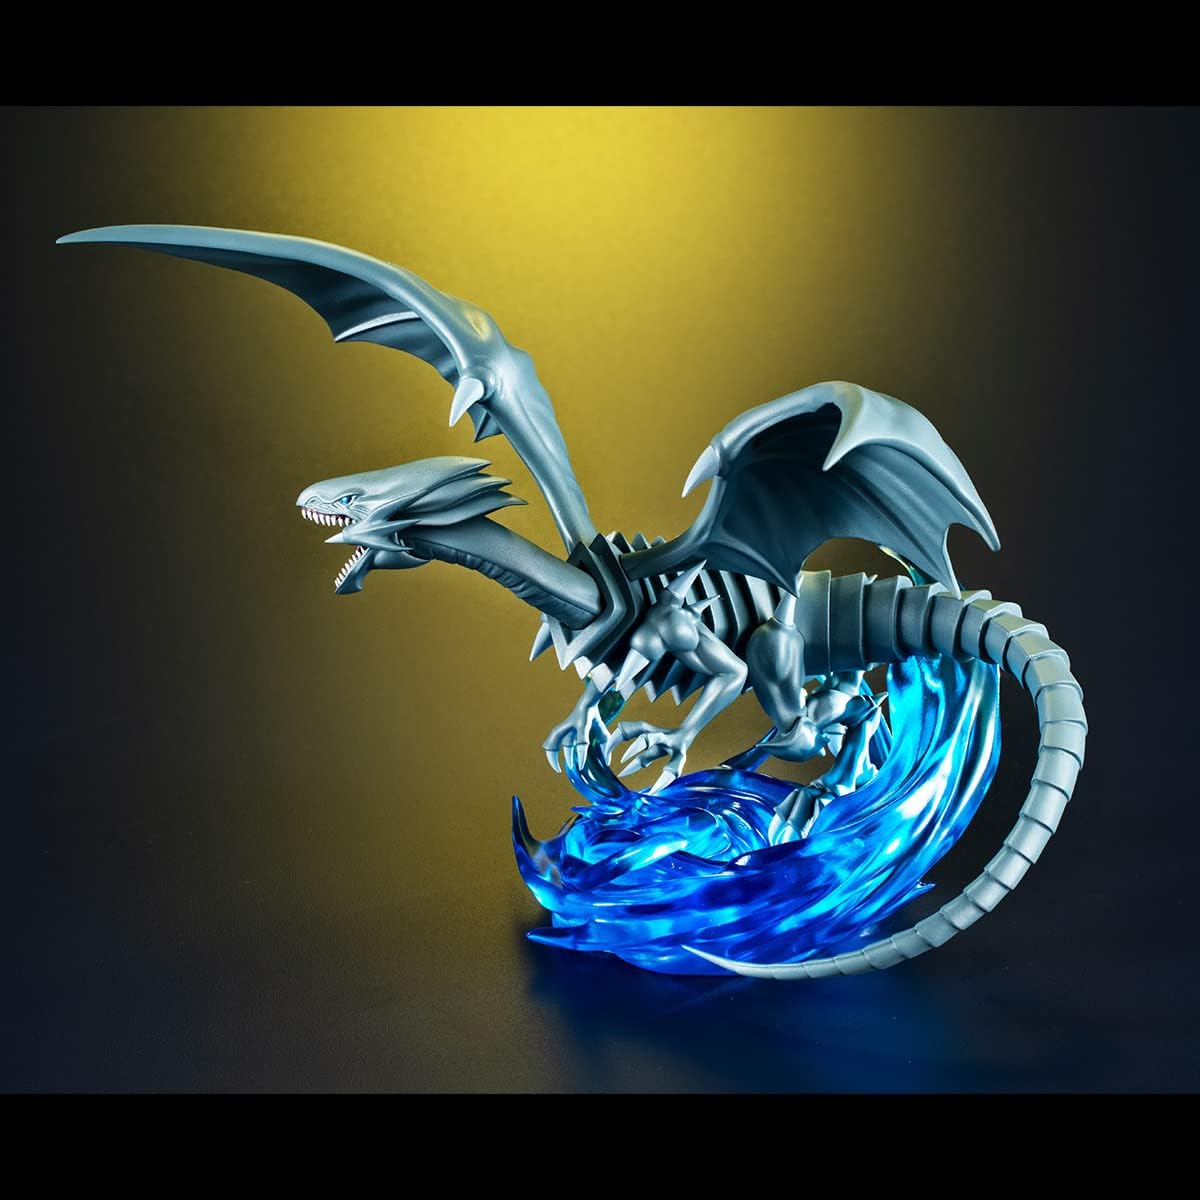 Yu-Gi-Oh!: Blue Eyes White Dragon - Monsters Chronicles Figure